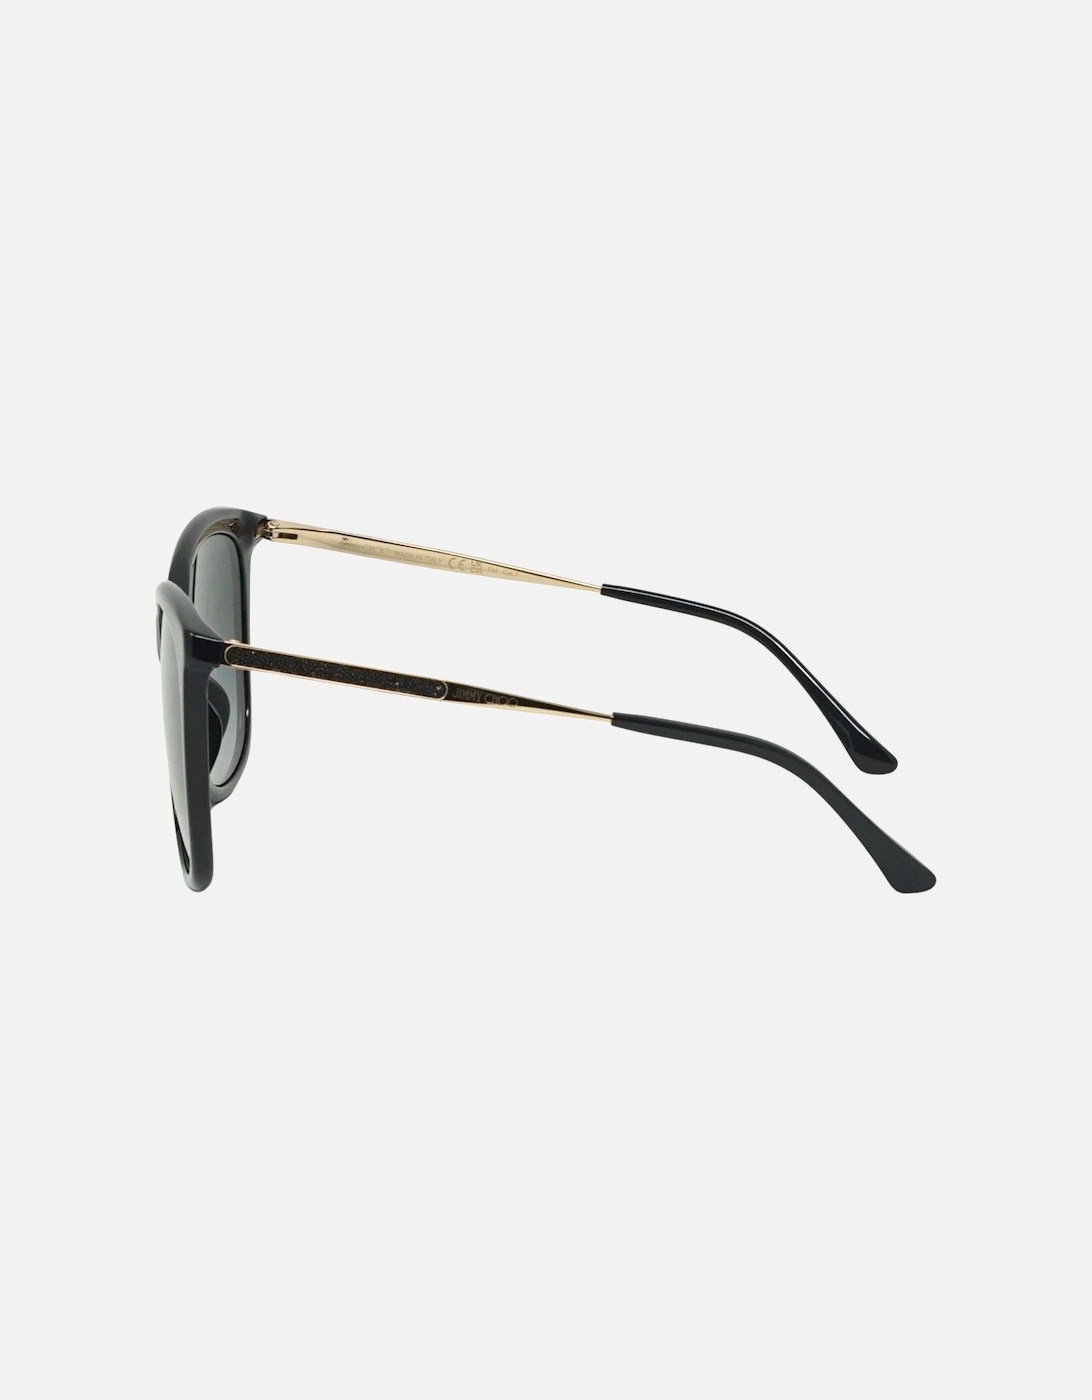 Nerea/G/S 807 Black Sunglasses